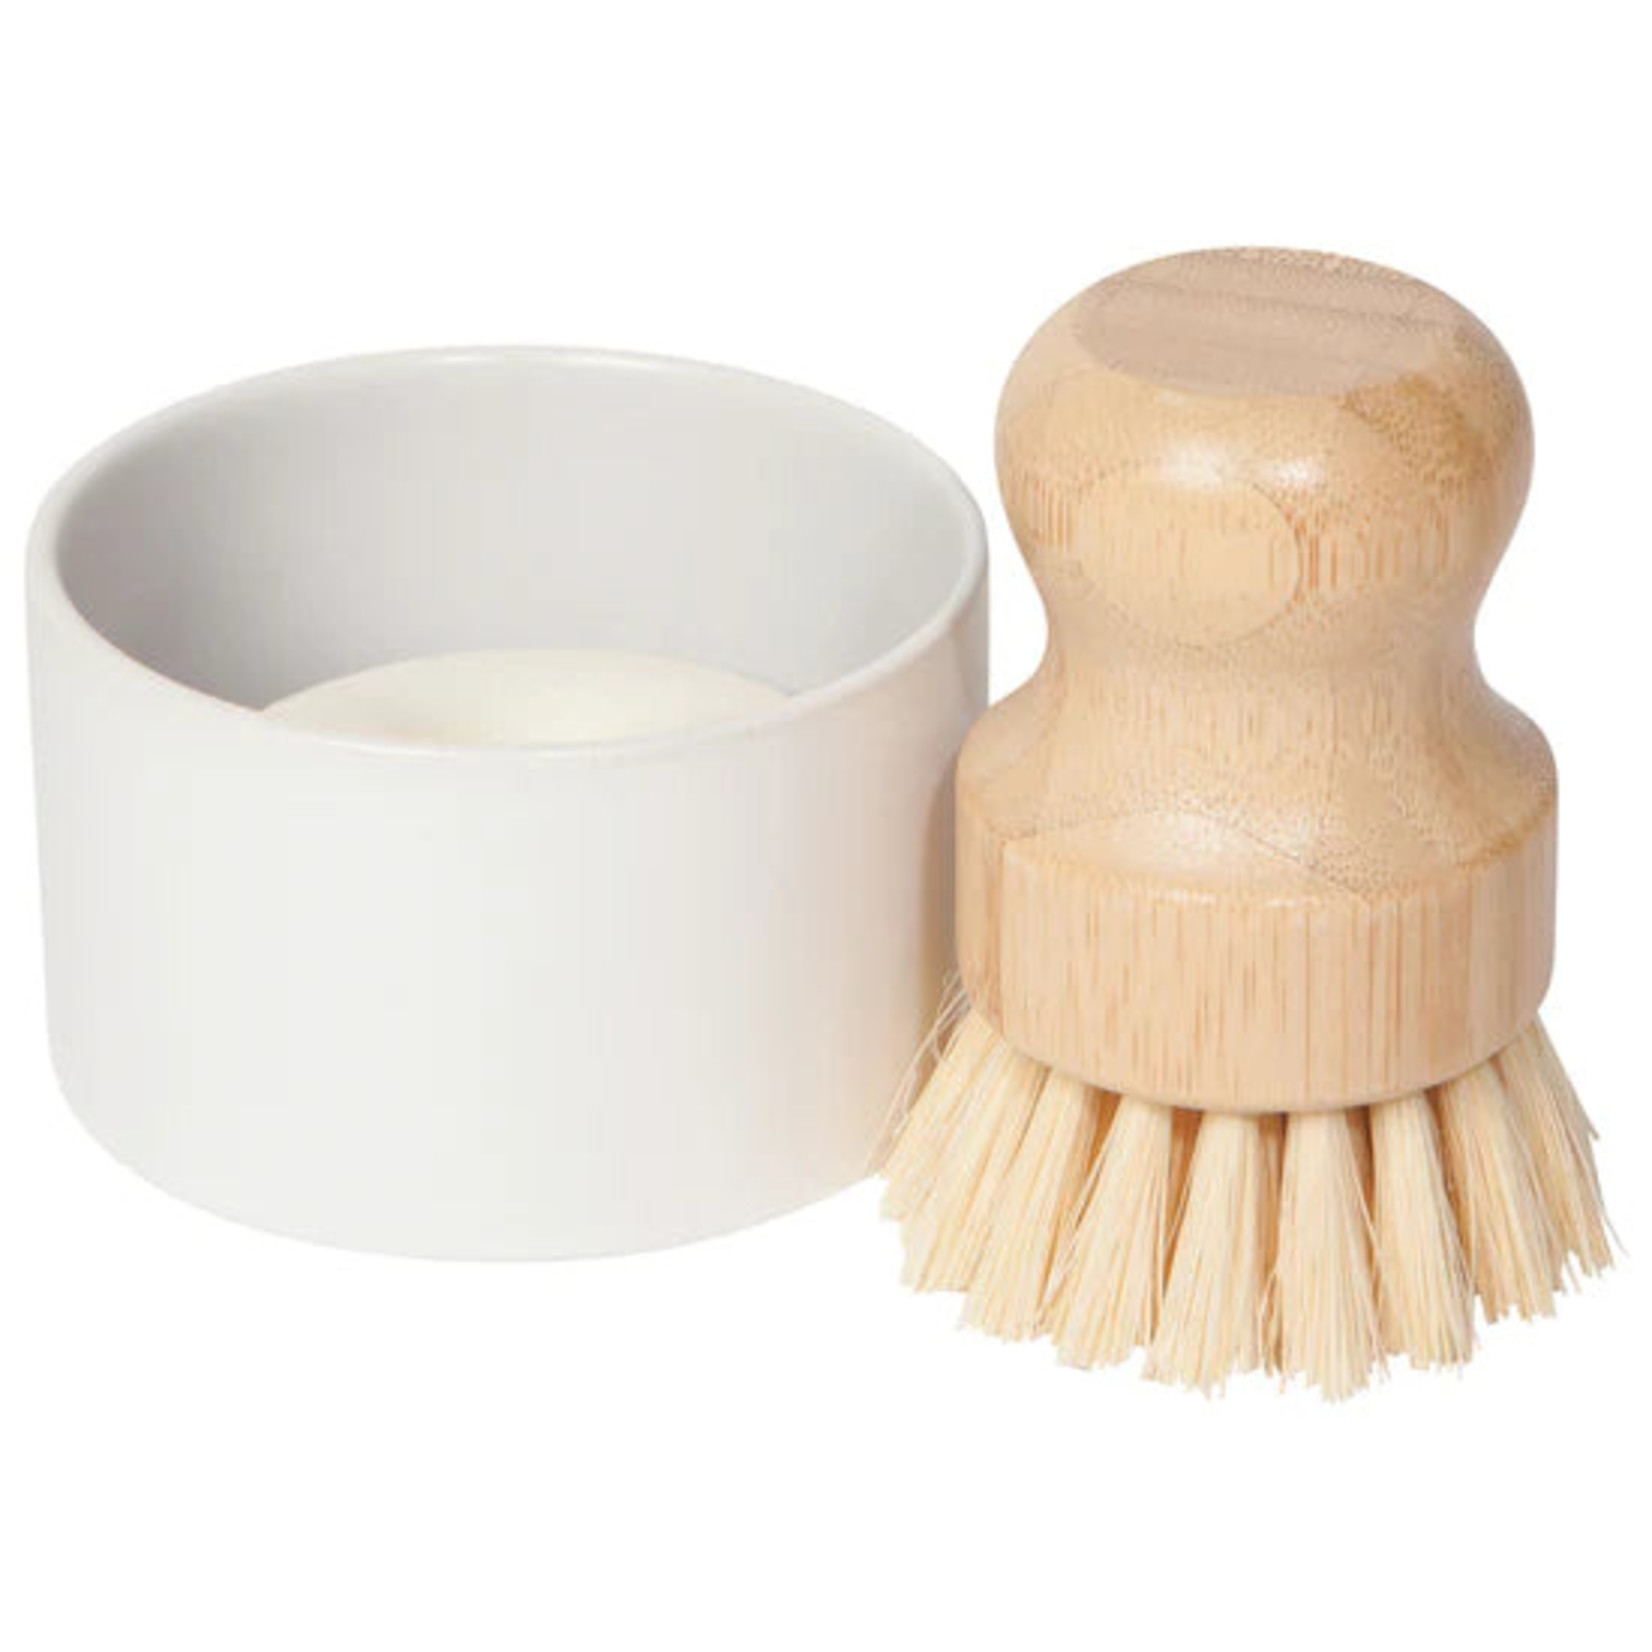 https://cdn.shoplightspeed.com/shops/638442/files/52239232/1652x1652x1/maison-dish-brush-soap-holder-set-of-3.jpg